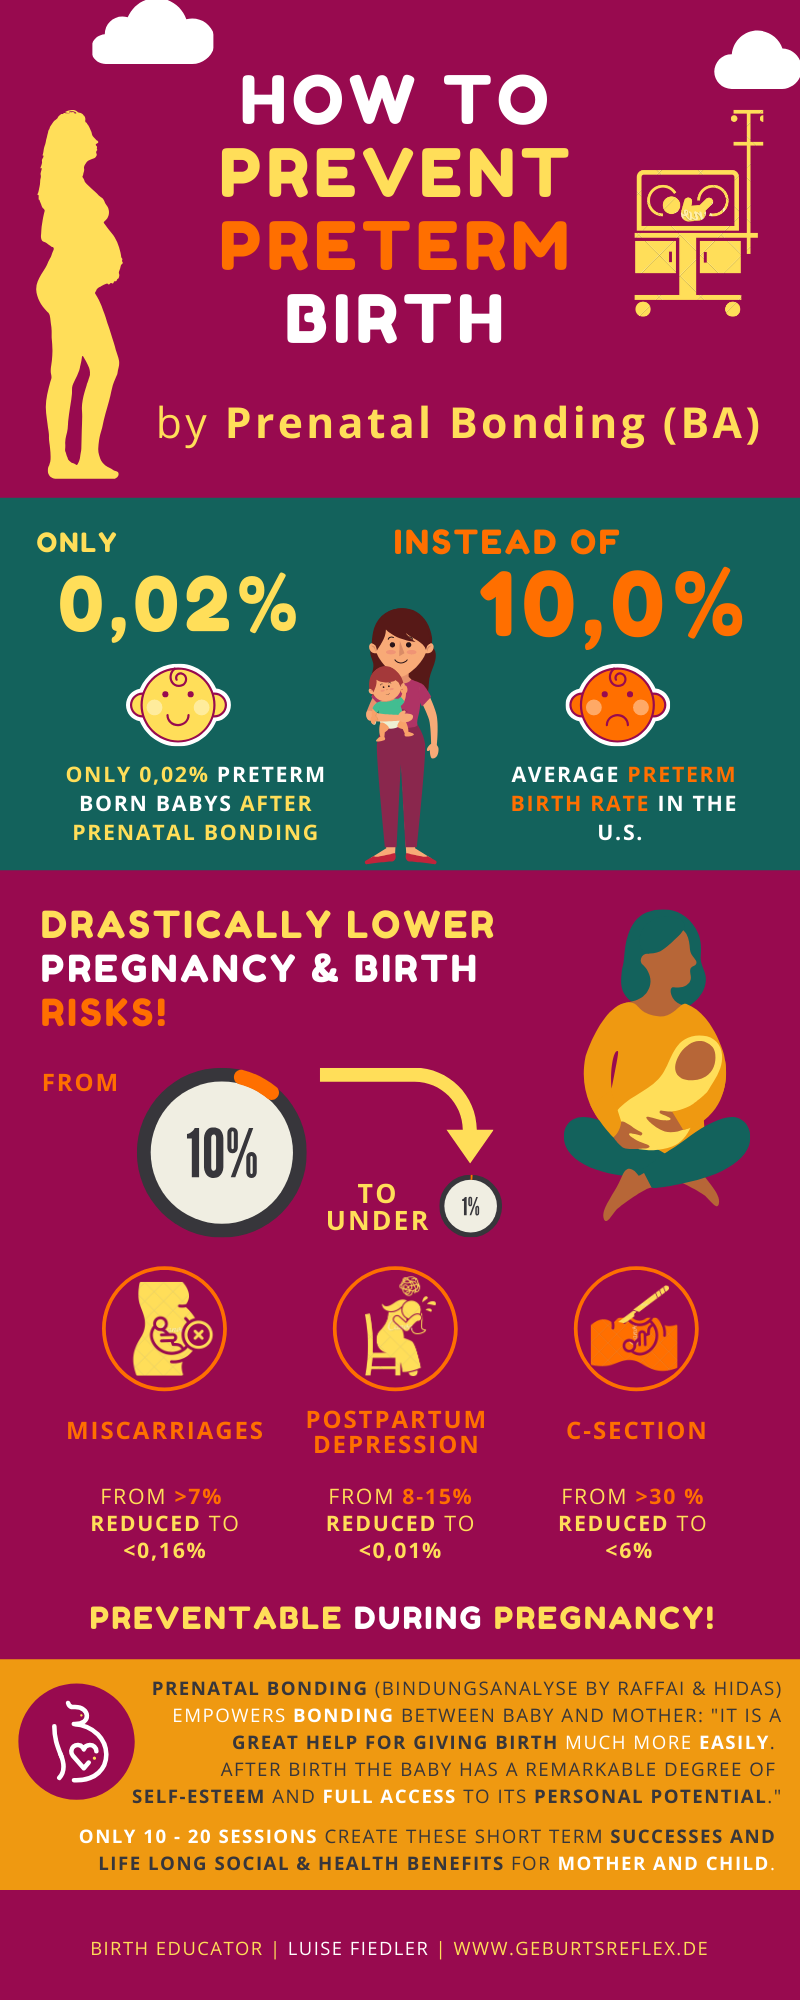 HOW TO PREVENT PRETERM BIRTH by Prenatal Bonding 
(BA - Bindungsanalyse by Raffai and Hidas)